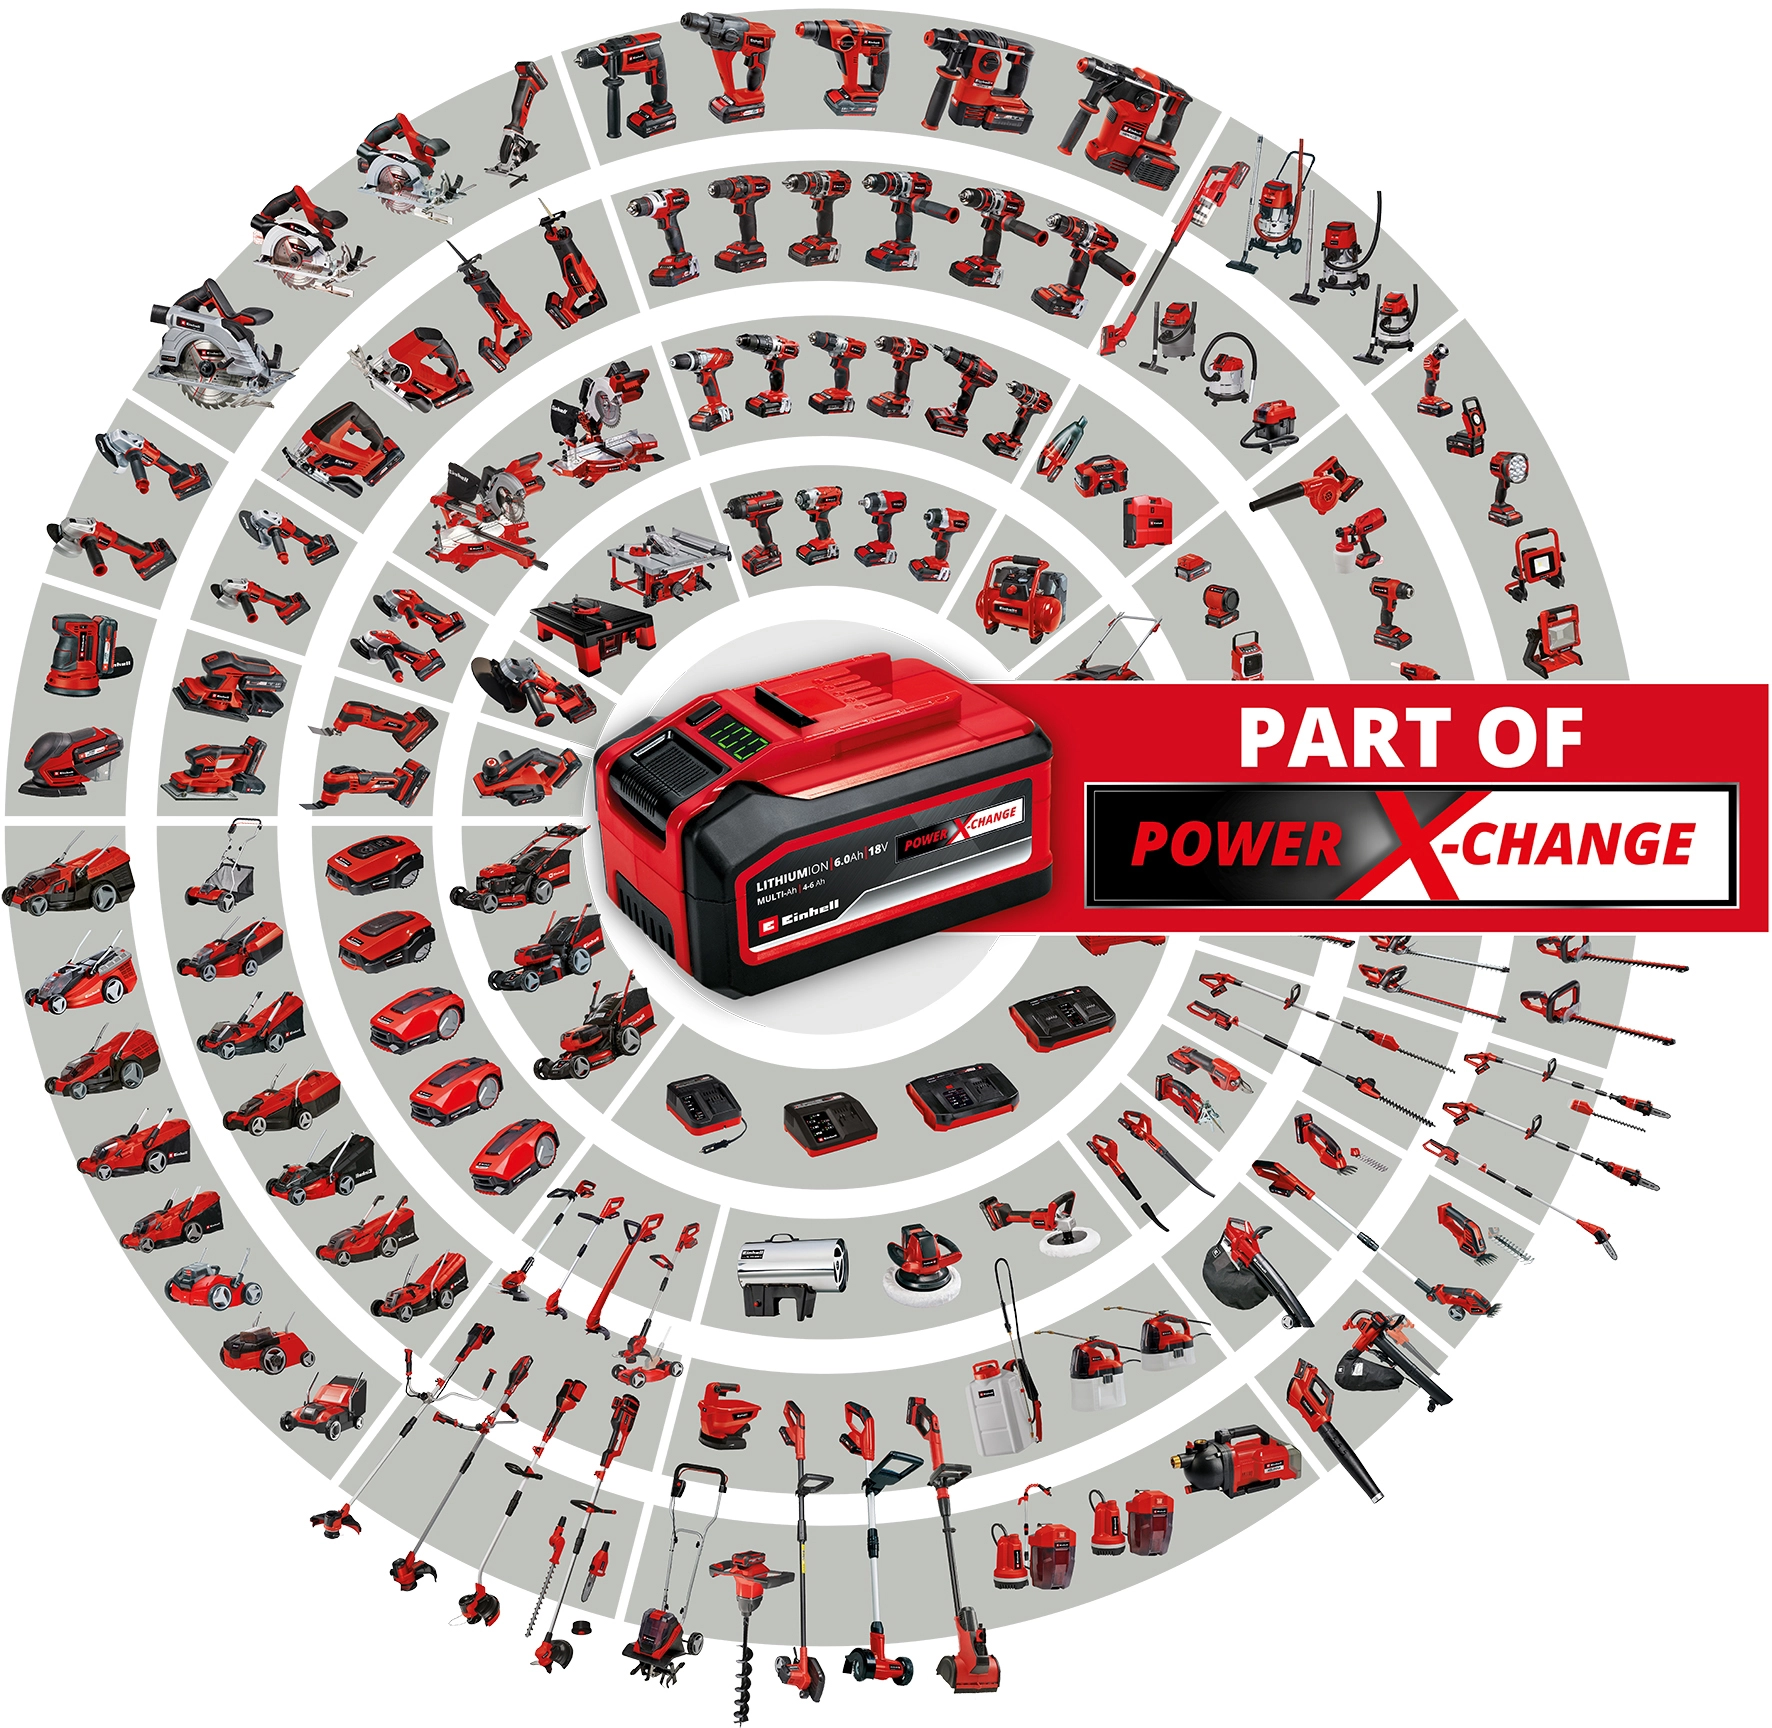 Power X-Change Akkuluftpumpe CE-AP 18 Li-Solo kaufen bei OBI